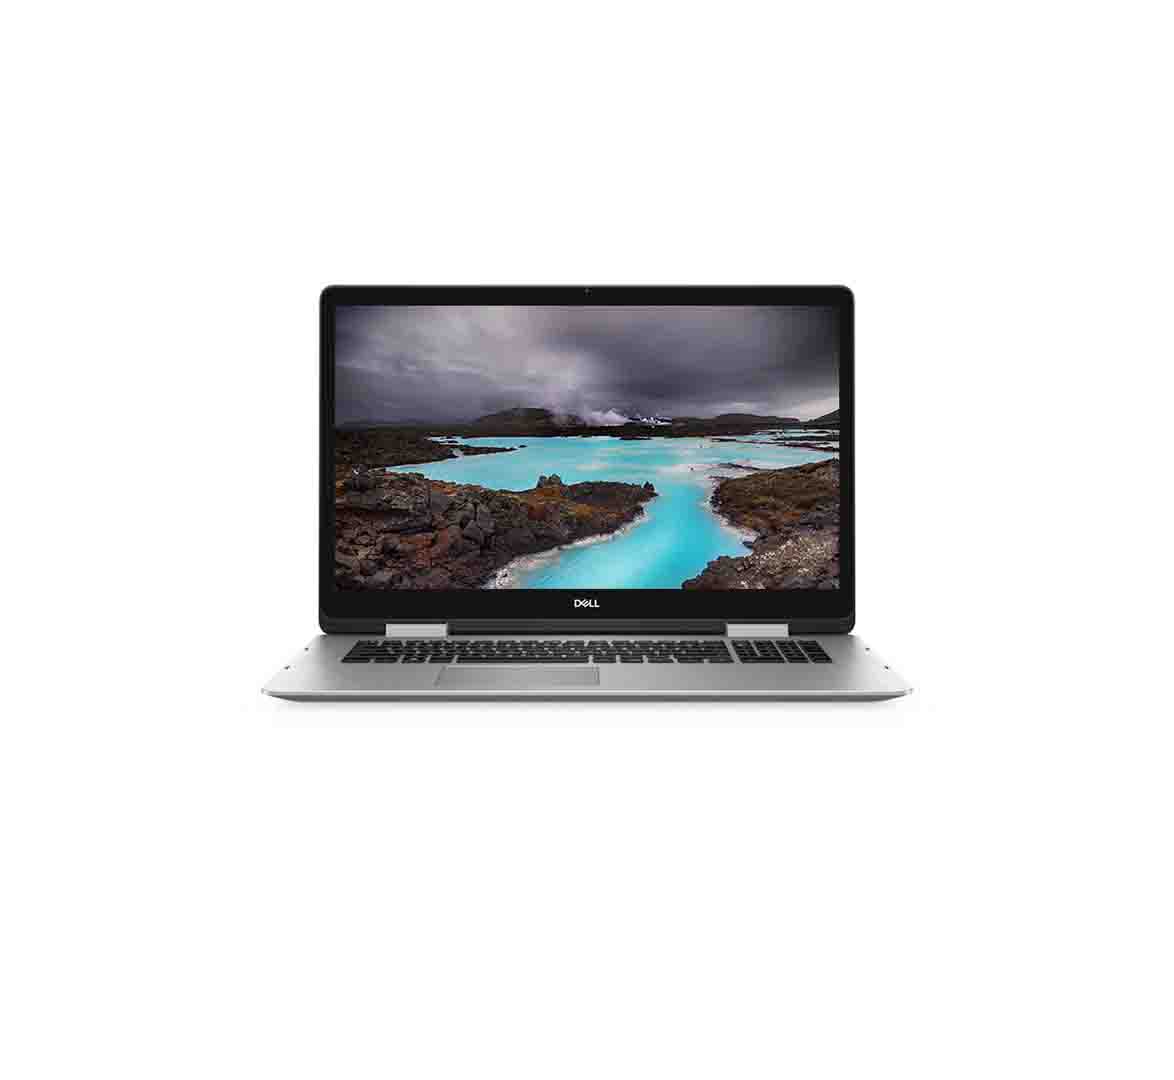 Dell Inspiron 7786 Business Laptop, Intel Core i7-8th Generation CPU, 16GB RAM, 1TB HDD , NVIDIA GEFORCE MX150 Graphics, 17.2 inch Display, Windows 10 Pro, Refurbished Laptop